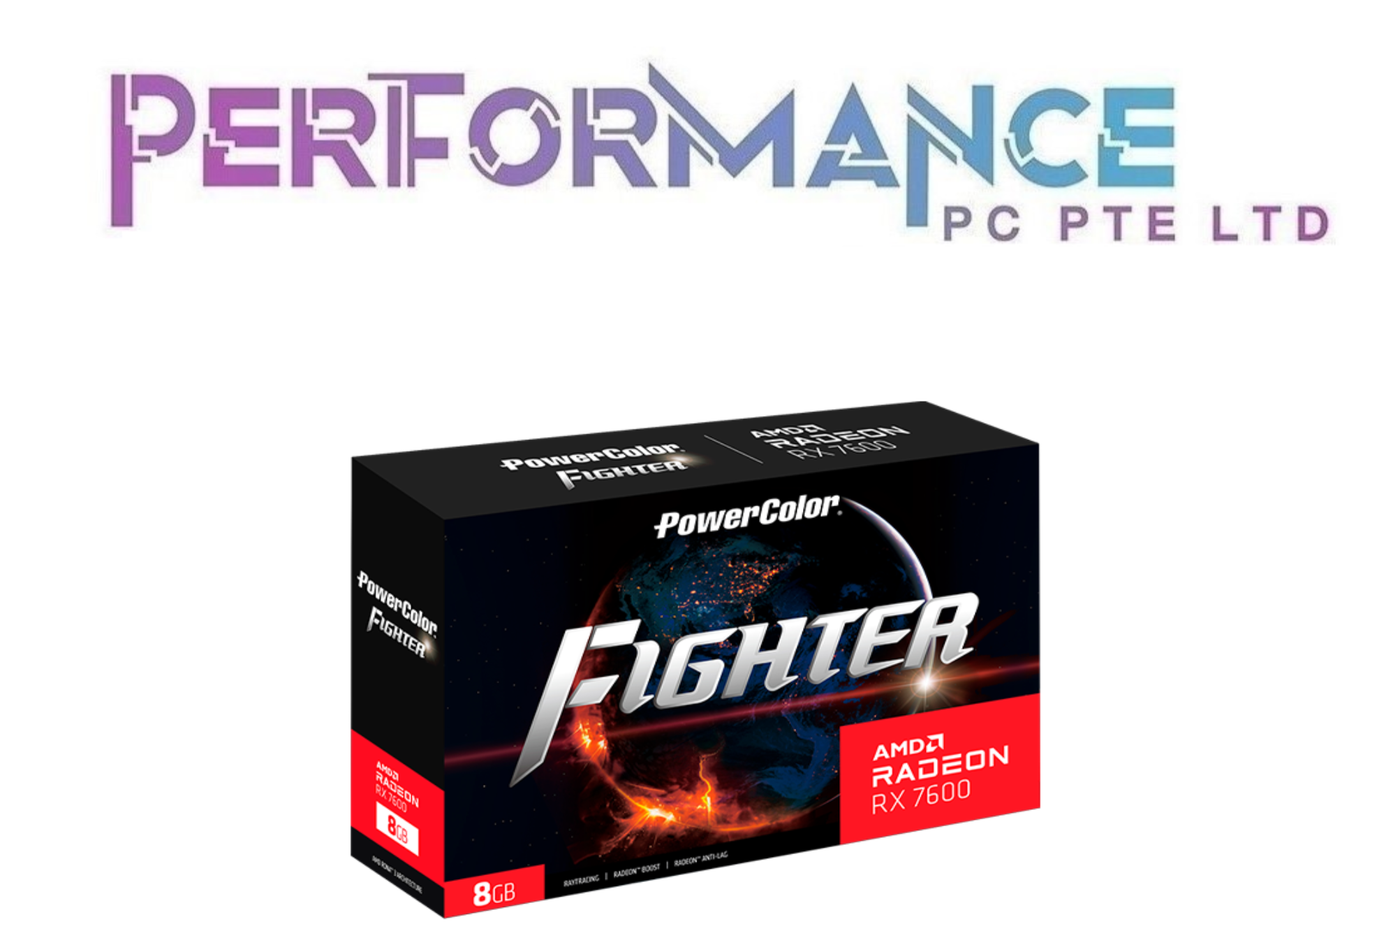 PowerColour Fighter AMD Radeon RX 7600 RX7600 8GB GDDR6 (3 YEARS WARRANTY BY BAN LEONG TECHNOLOGIES PTE LTD)